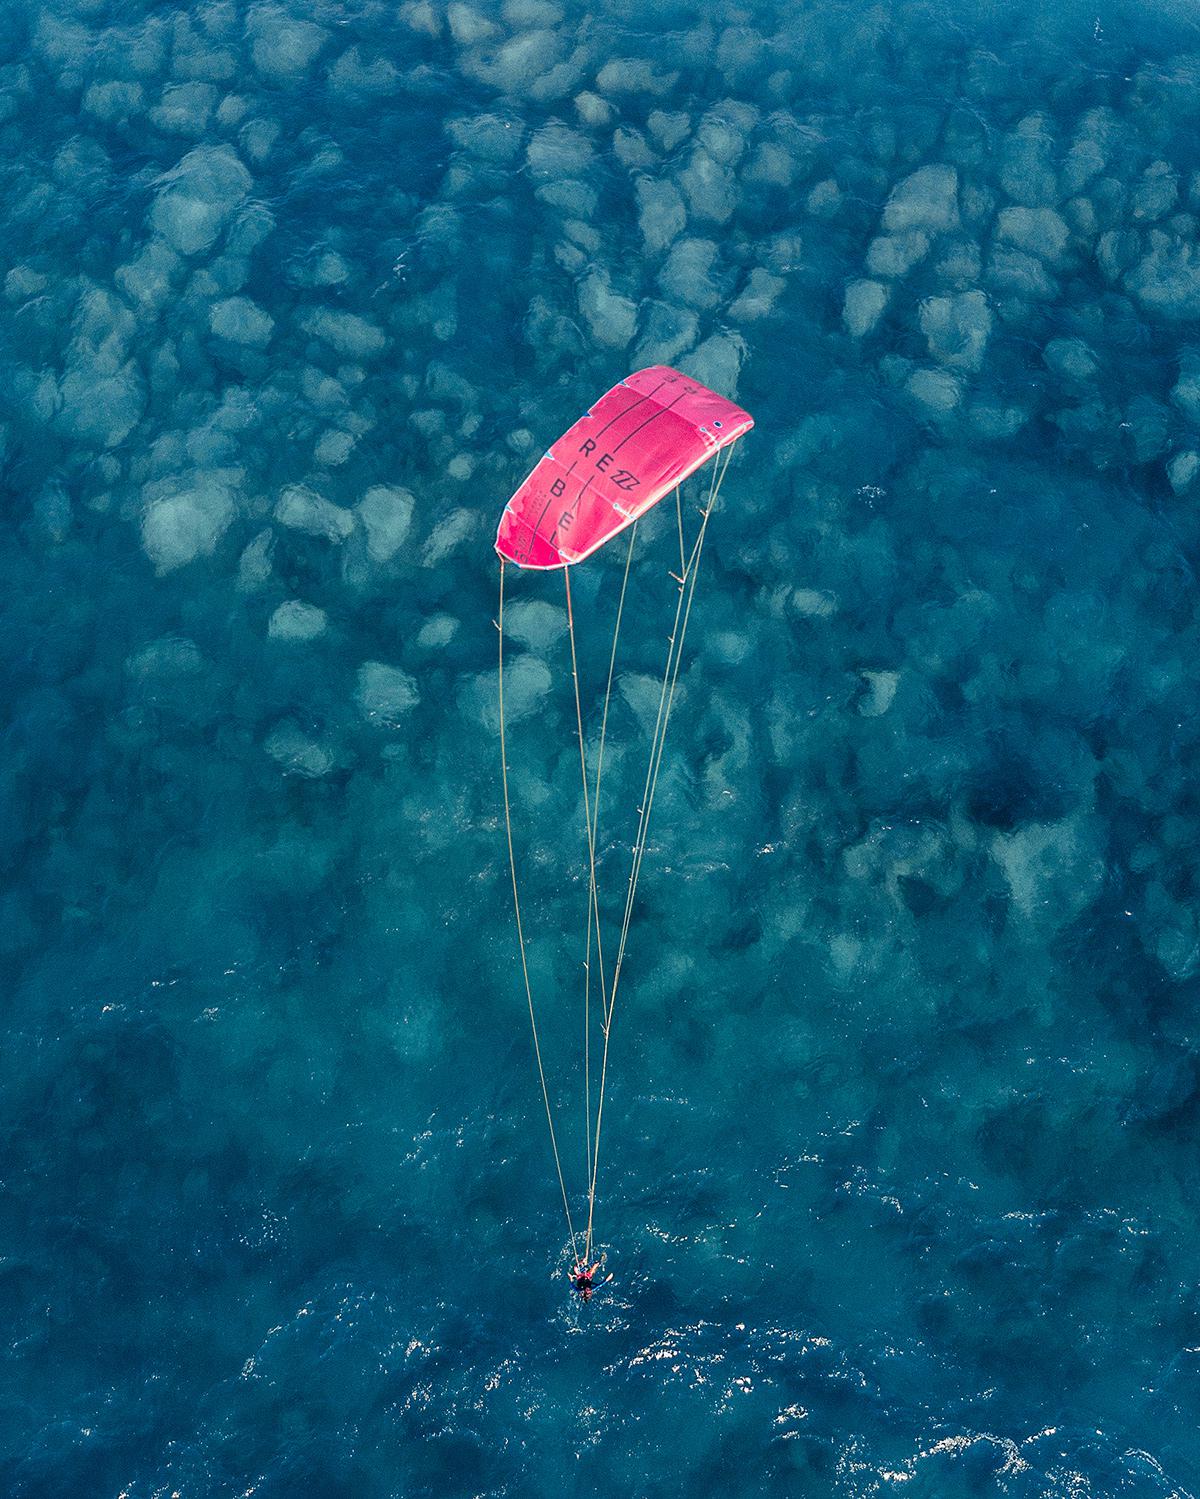 Drone Portraits Spectacular Aerial Photography Series By Dimitar Karanikolov 9